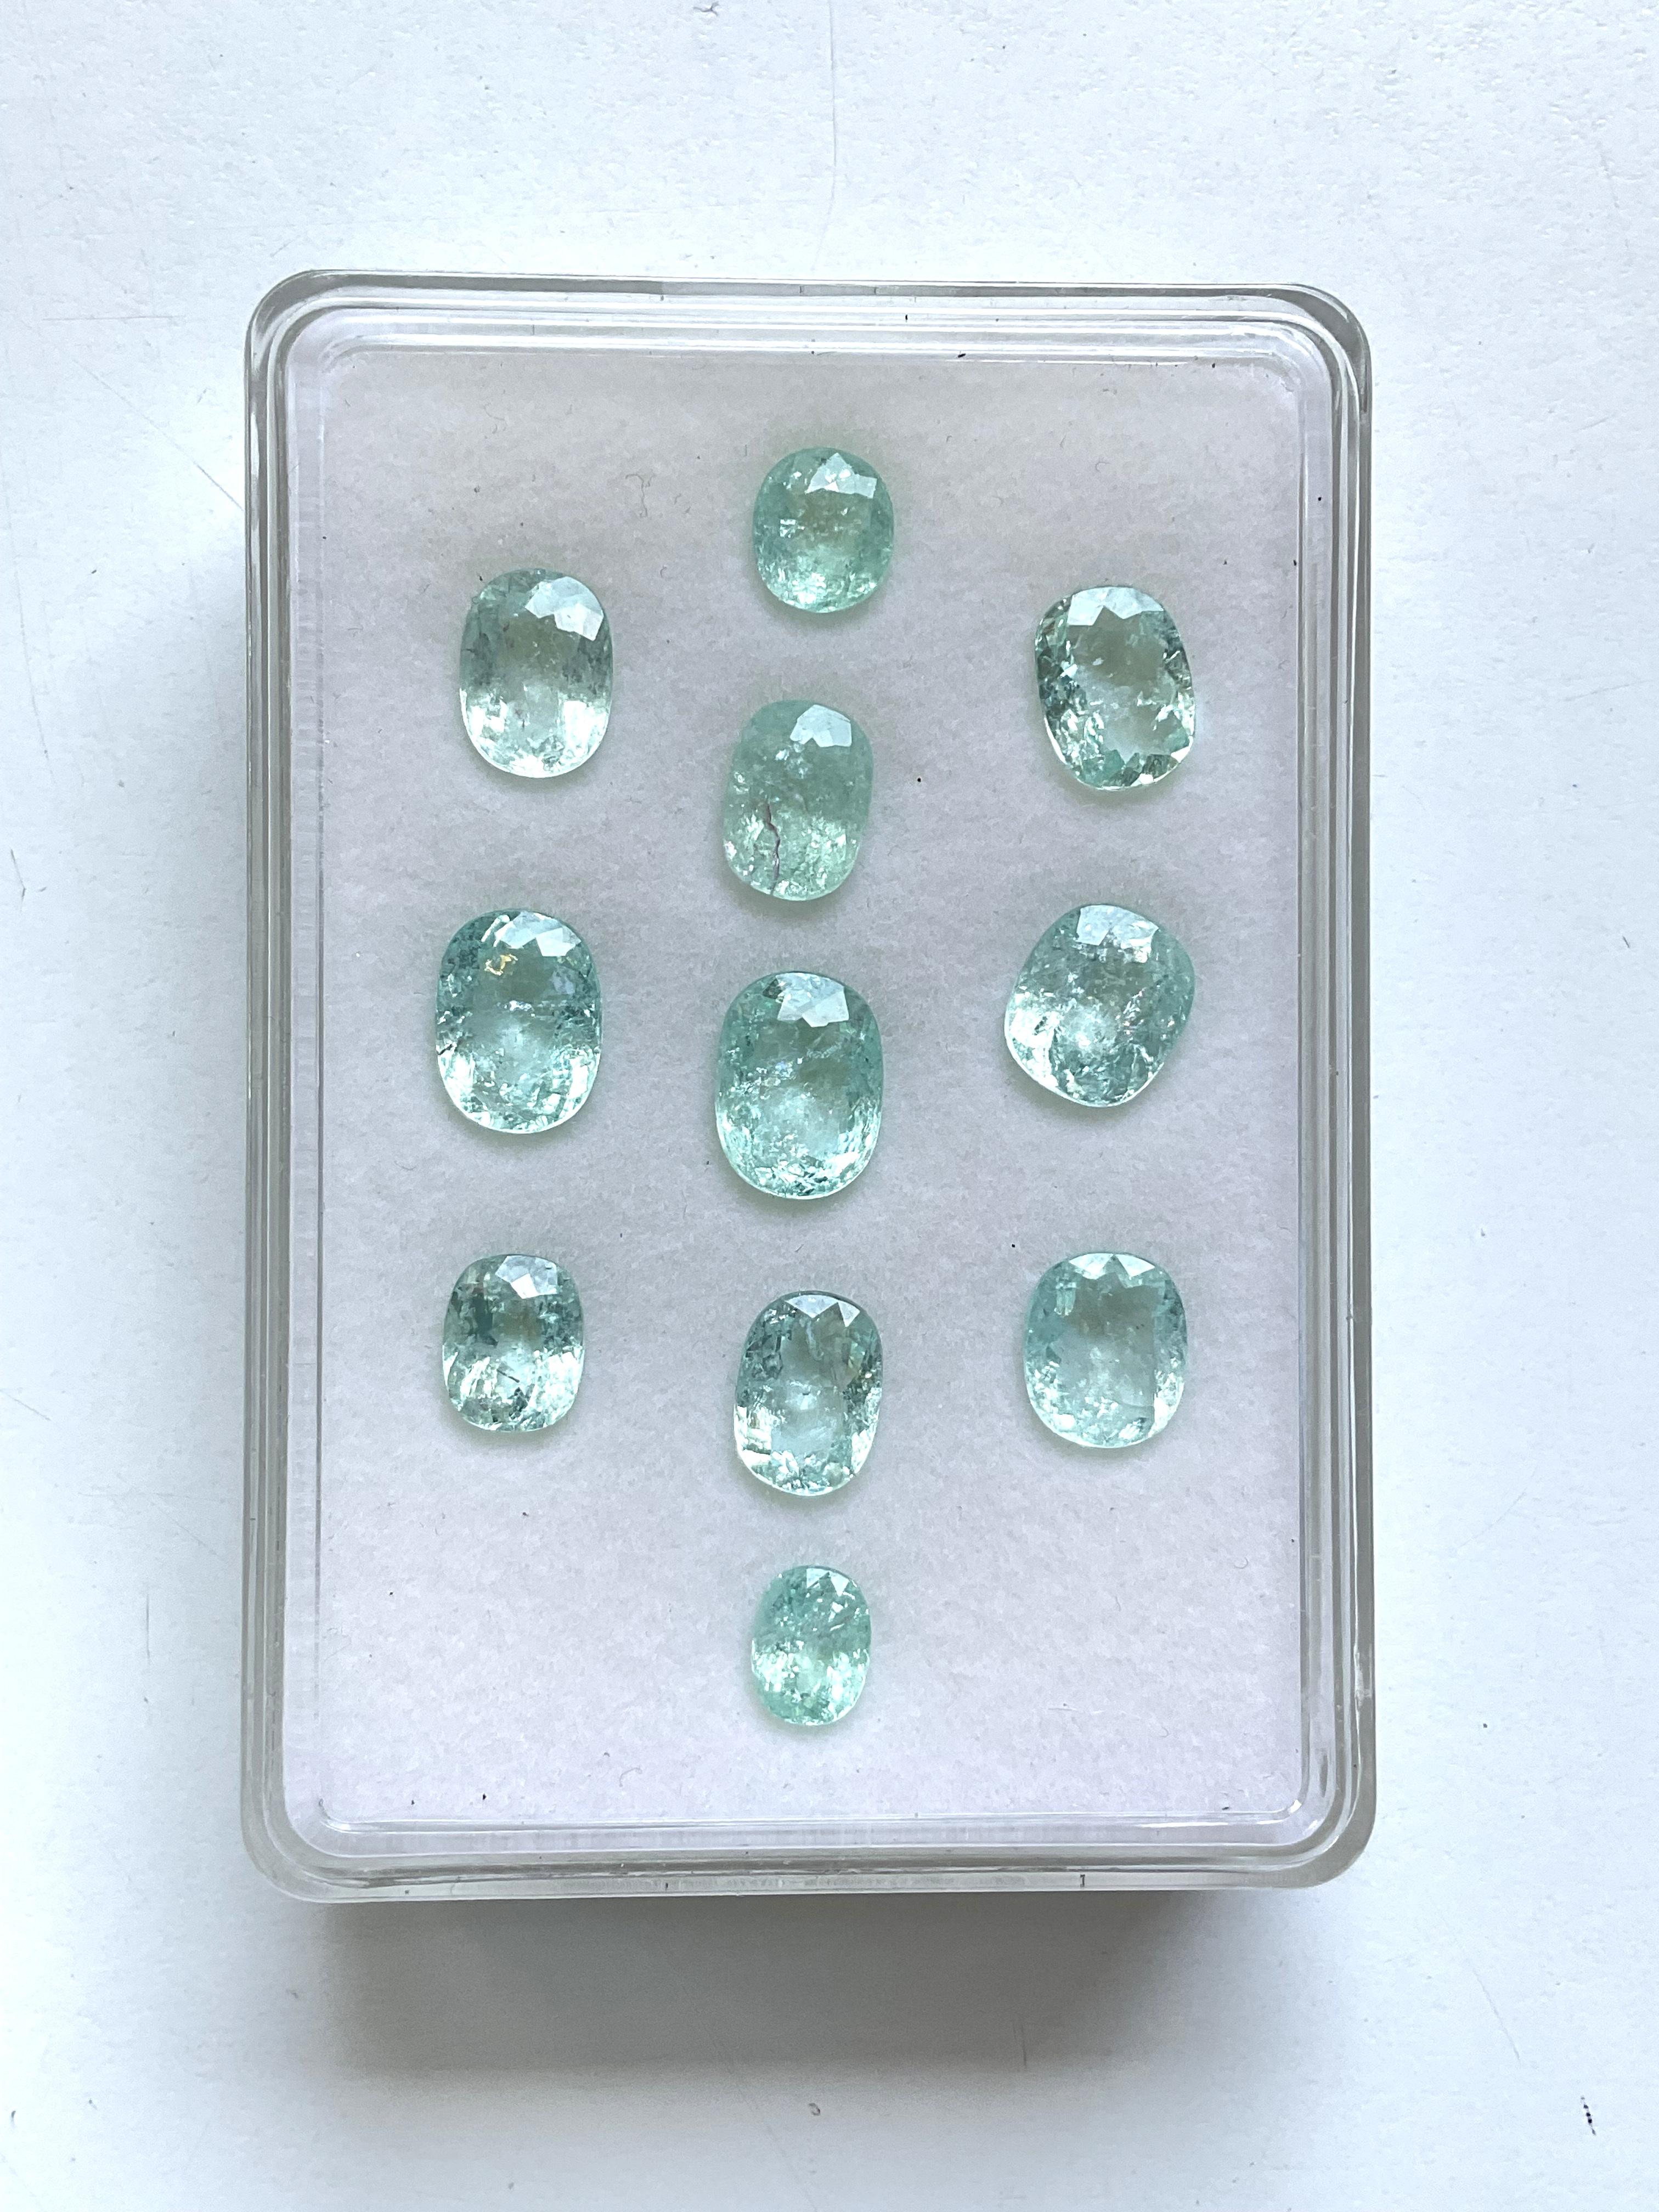 36.04 Carats Paraiba Tourmaline Oval Cut stone Top Quality for Fine Jewelry Gem

Gemstone - Paraiba Tourmaline
Color - Greenish Blue
Size - 7x8 To 11x8 MM
Weight - 36.04
Piece - 11